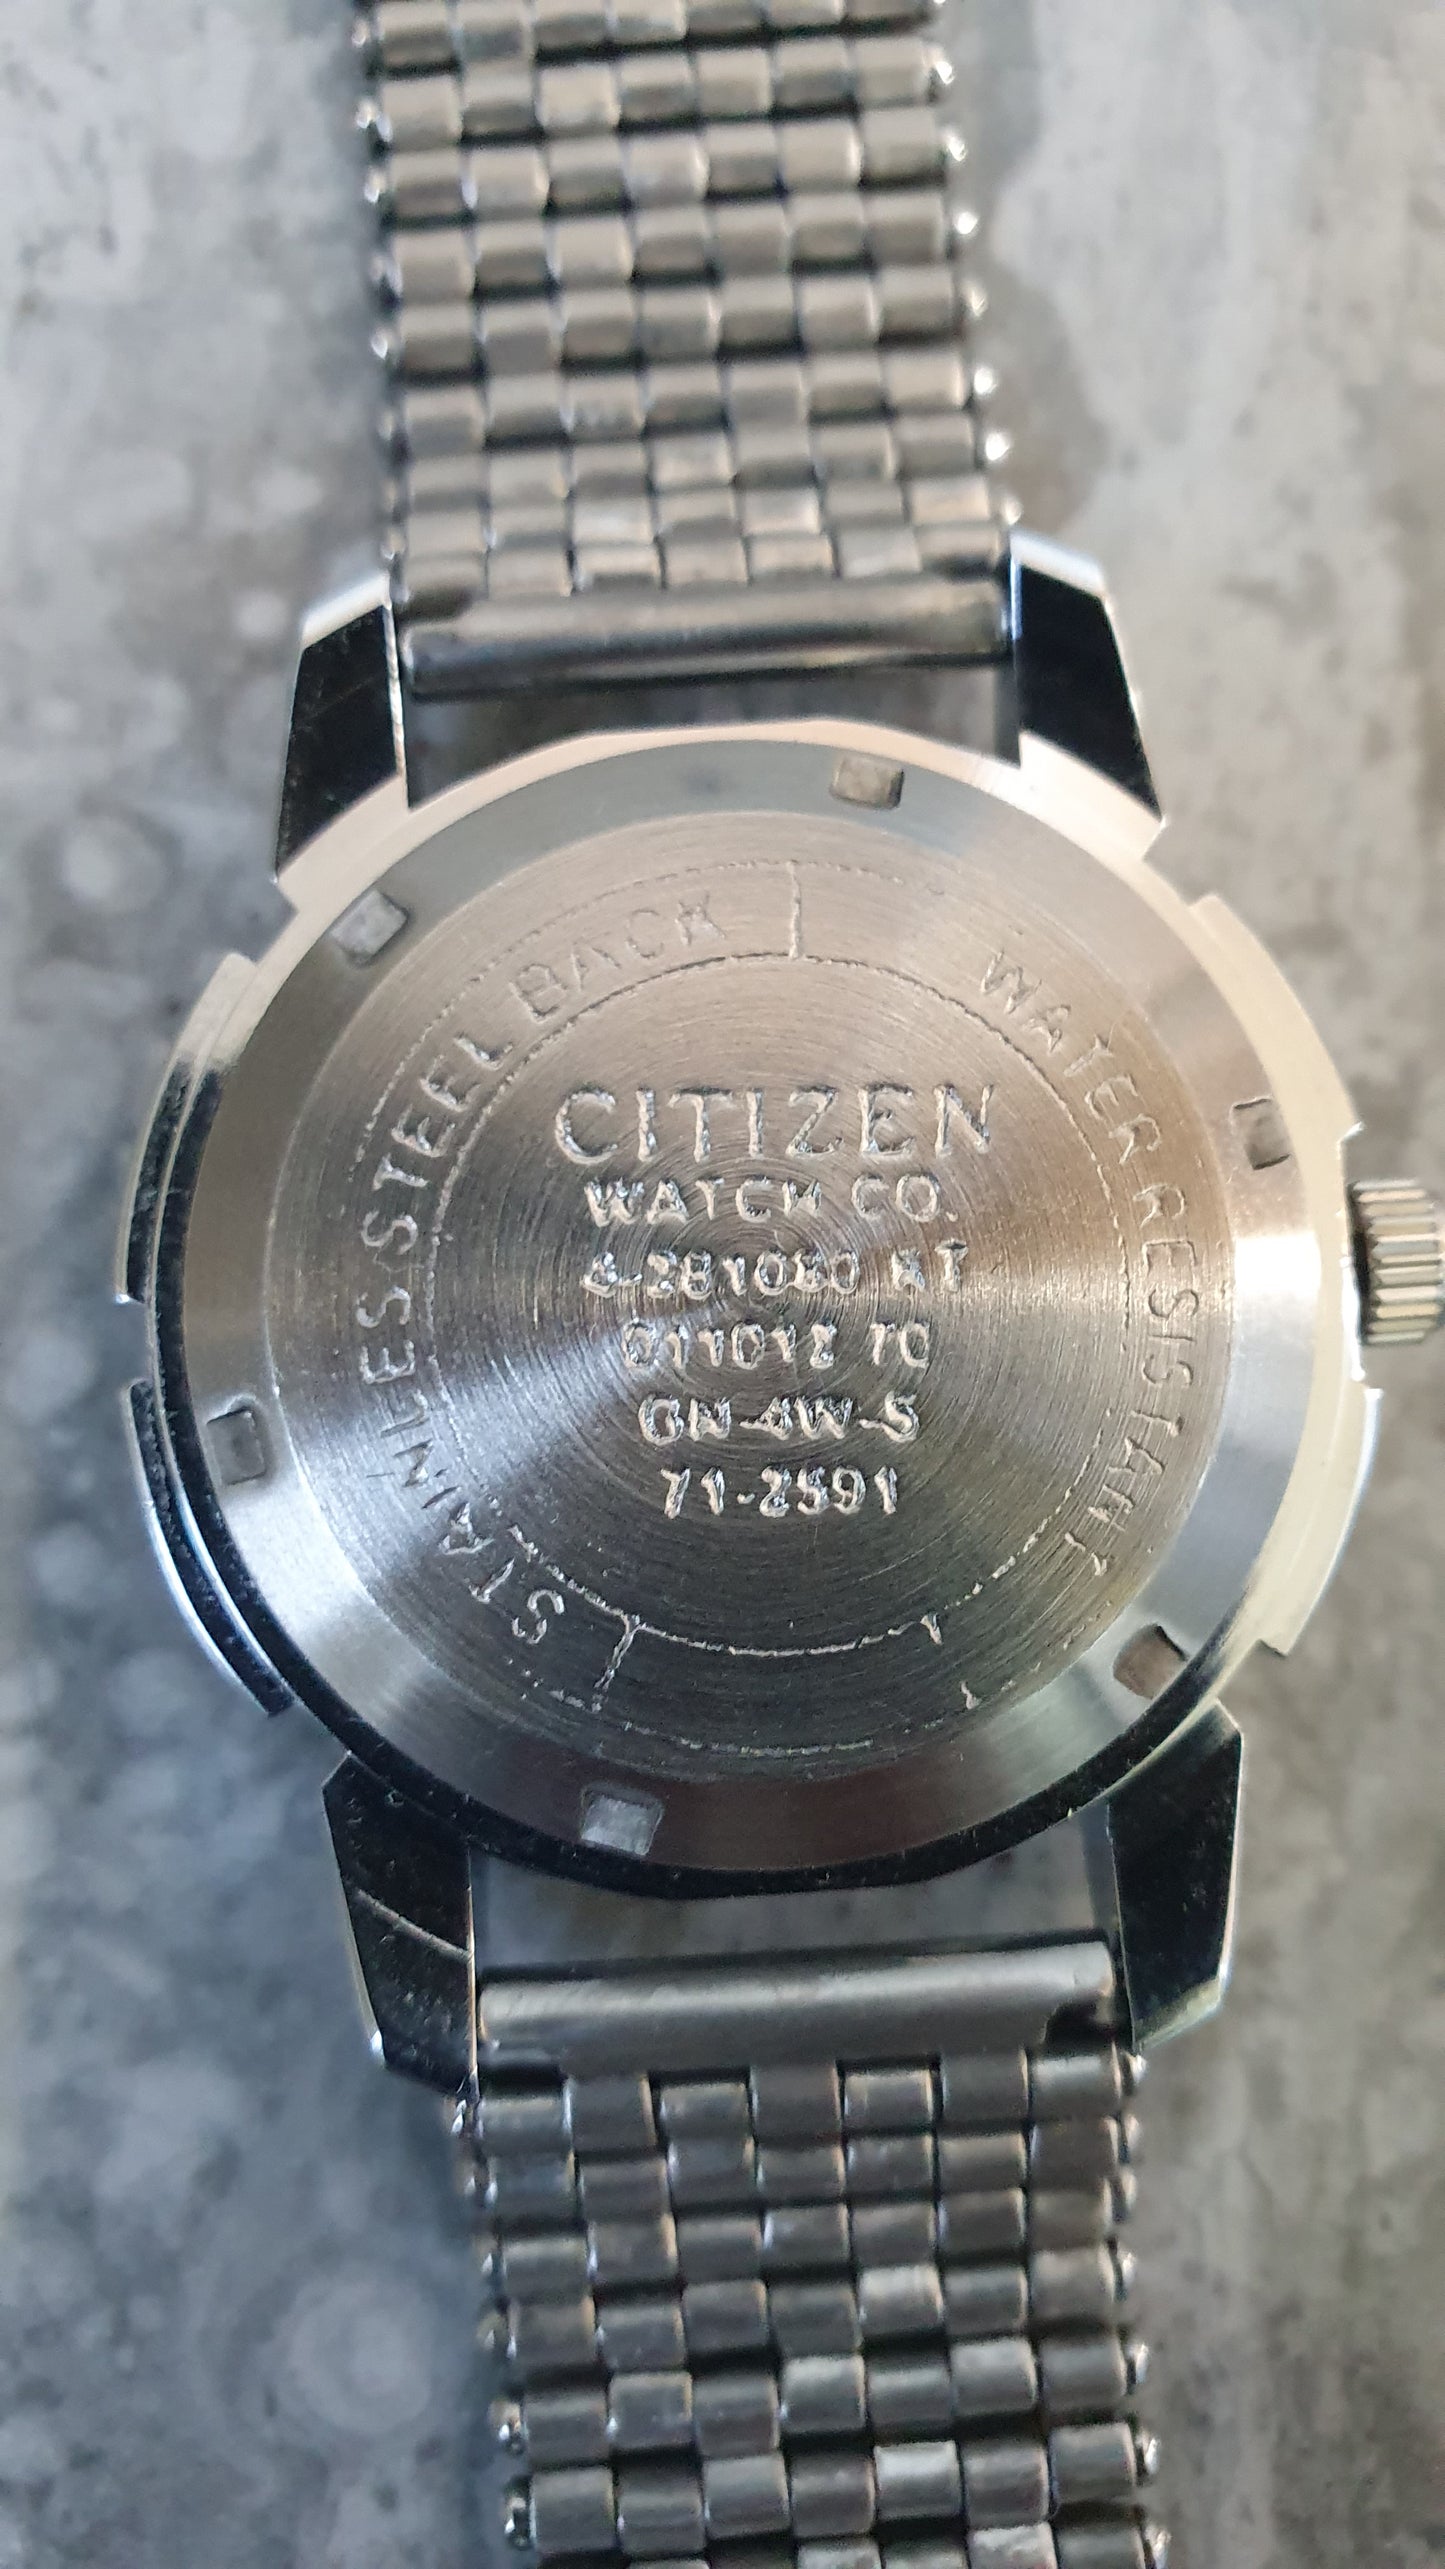 Citizen - Eagle 7 Automatic (White & Gold Dial)